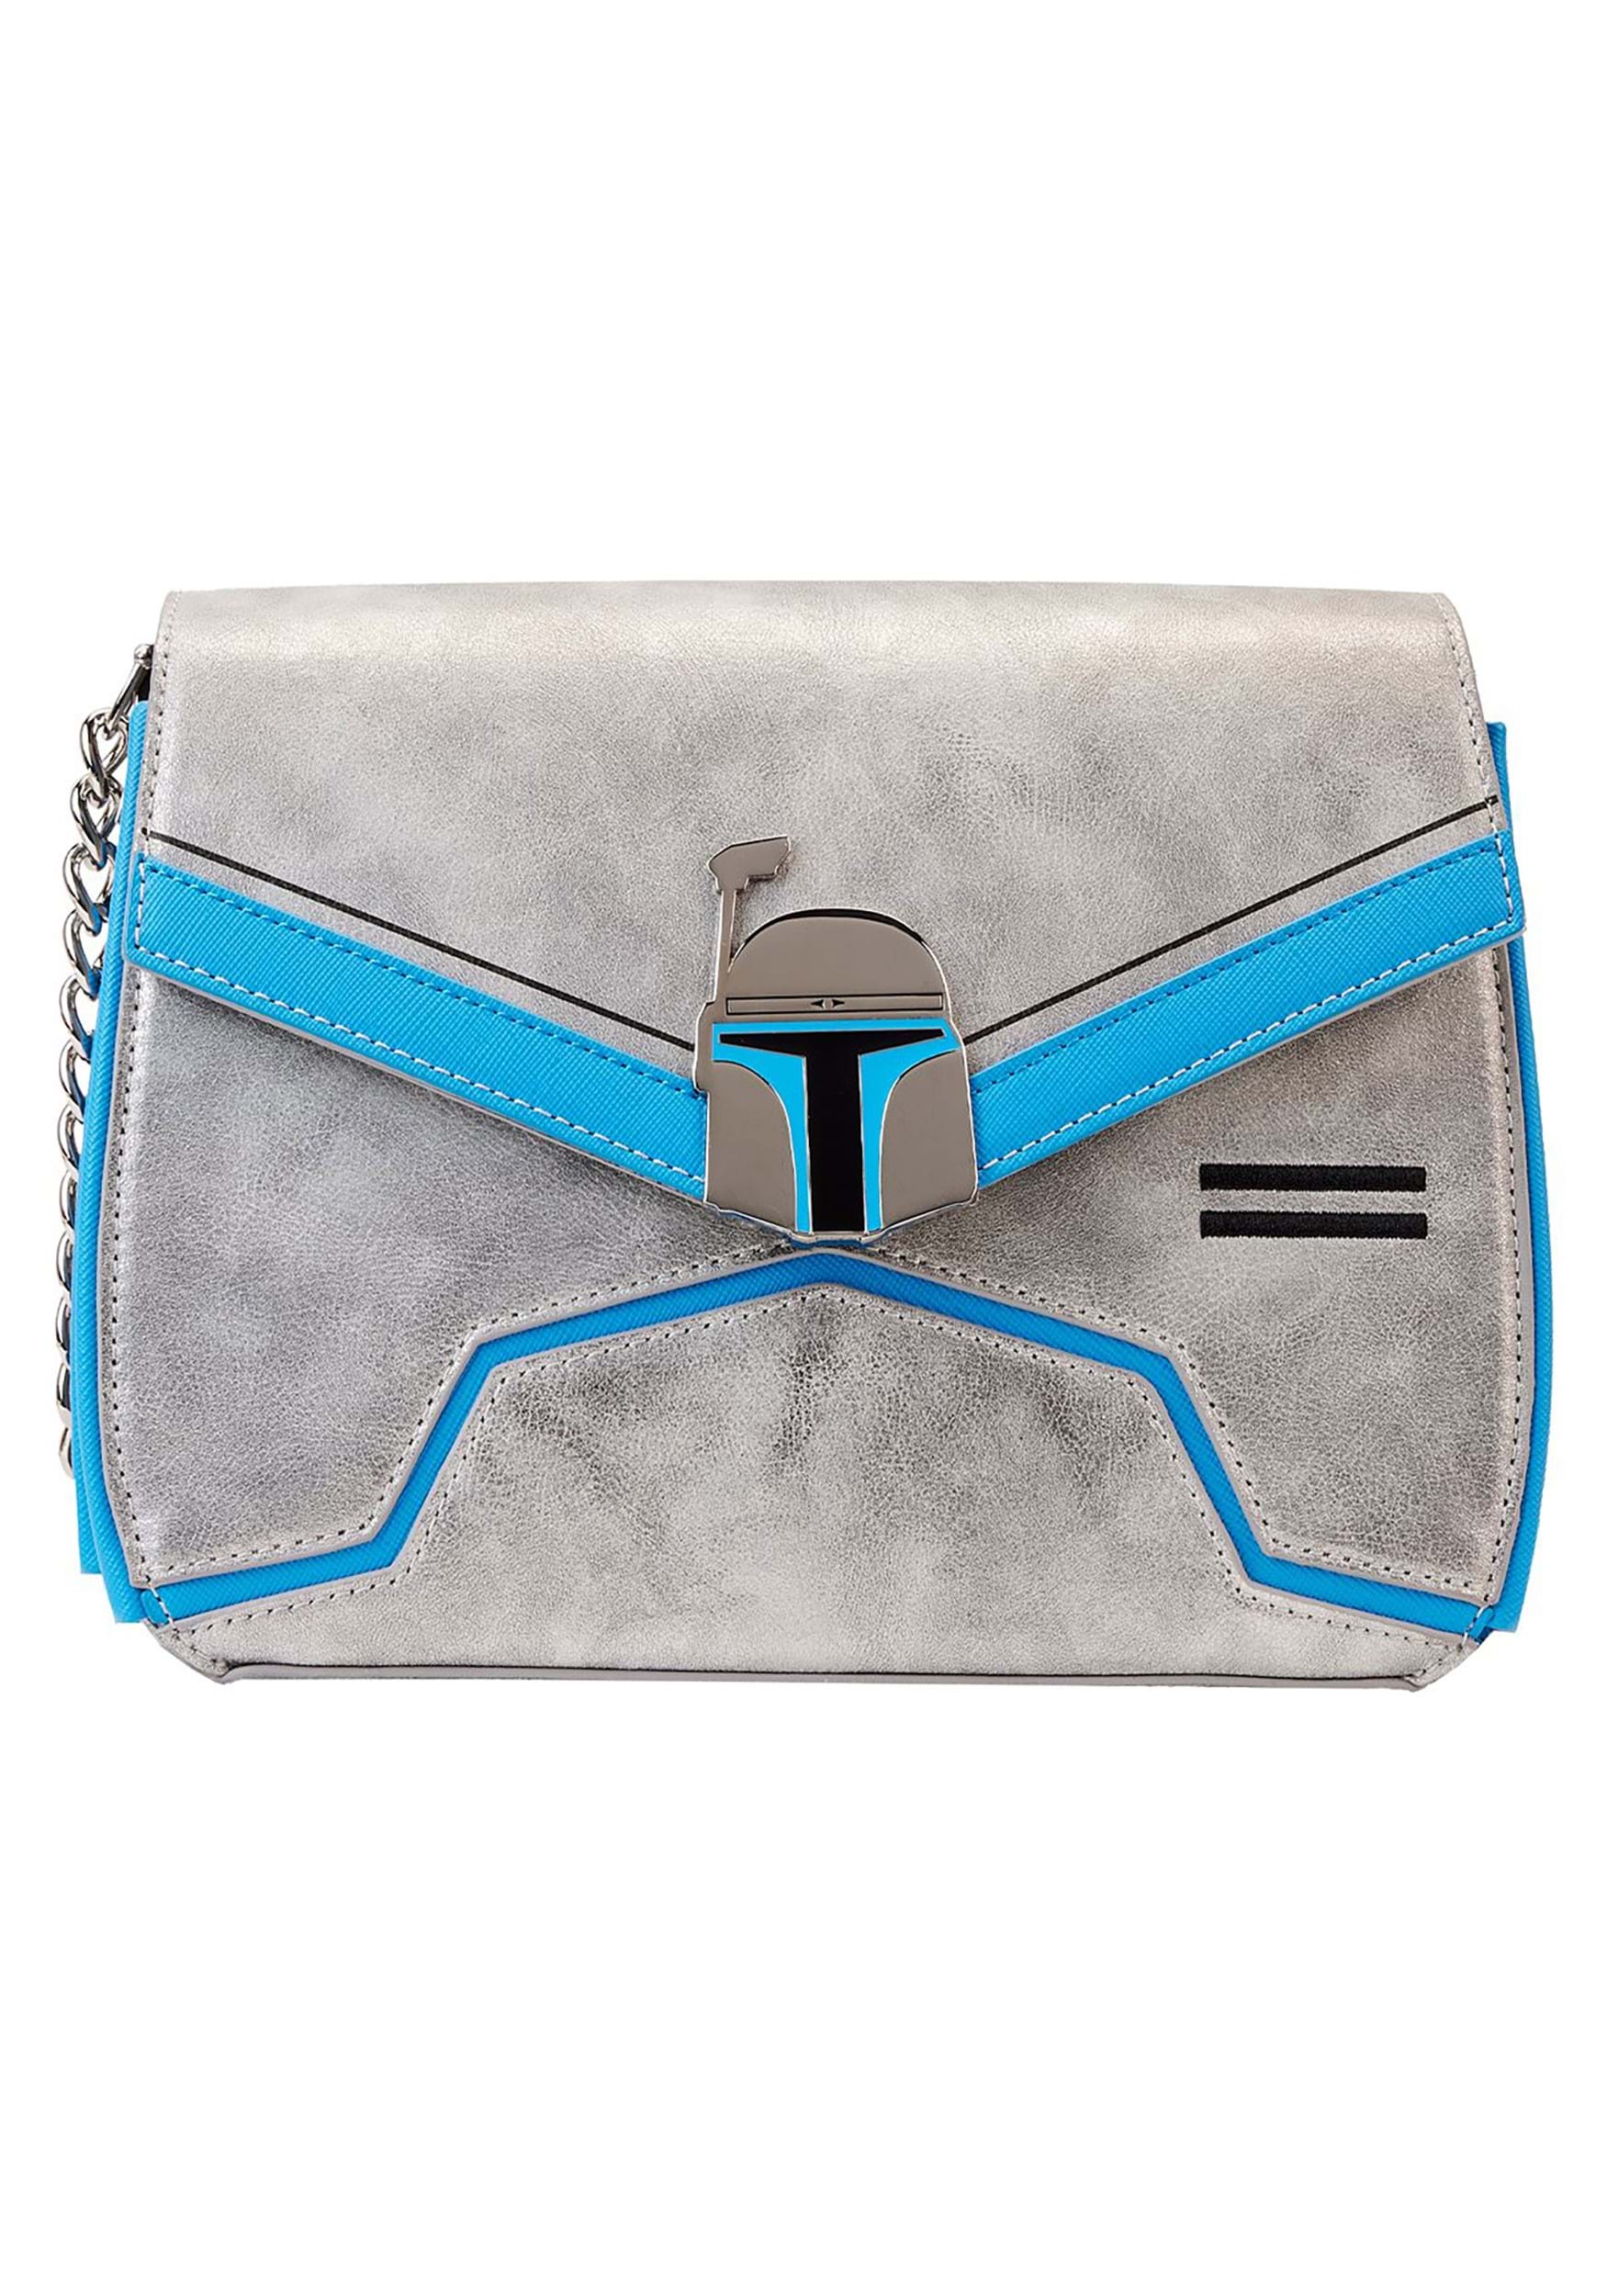 Star Wars Jango Fett Chain Strap Loungefly Crossbody Bag